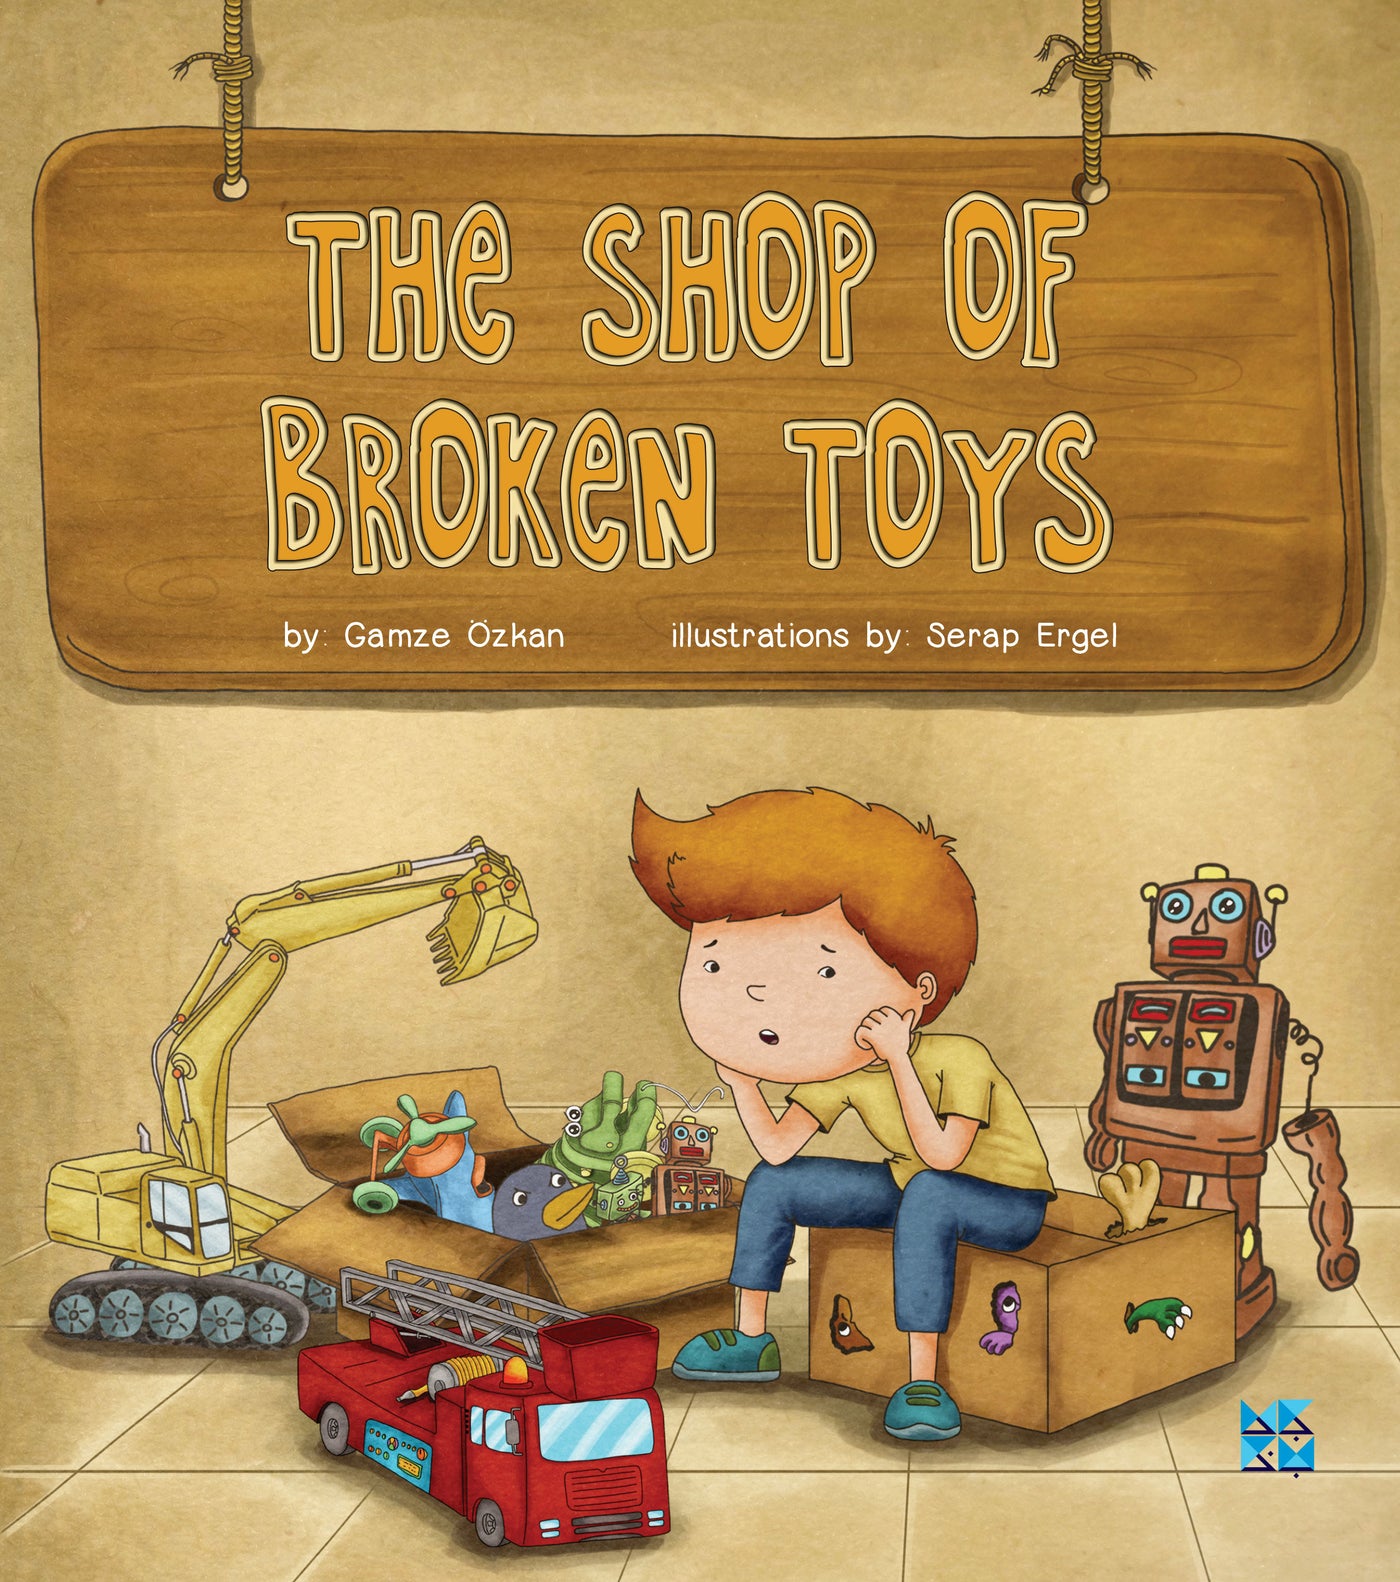 The Shop of Broken Toys - Book Series Cover